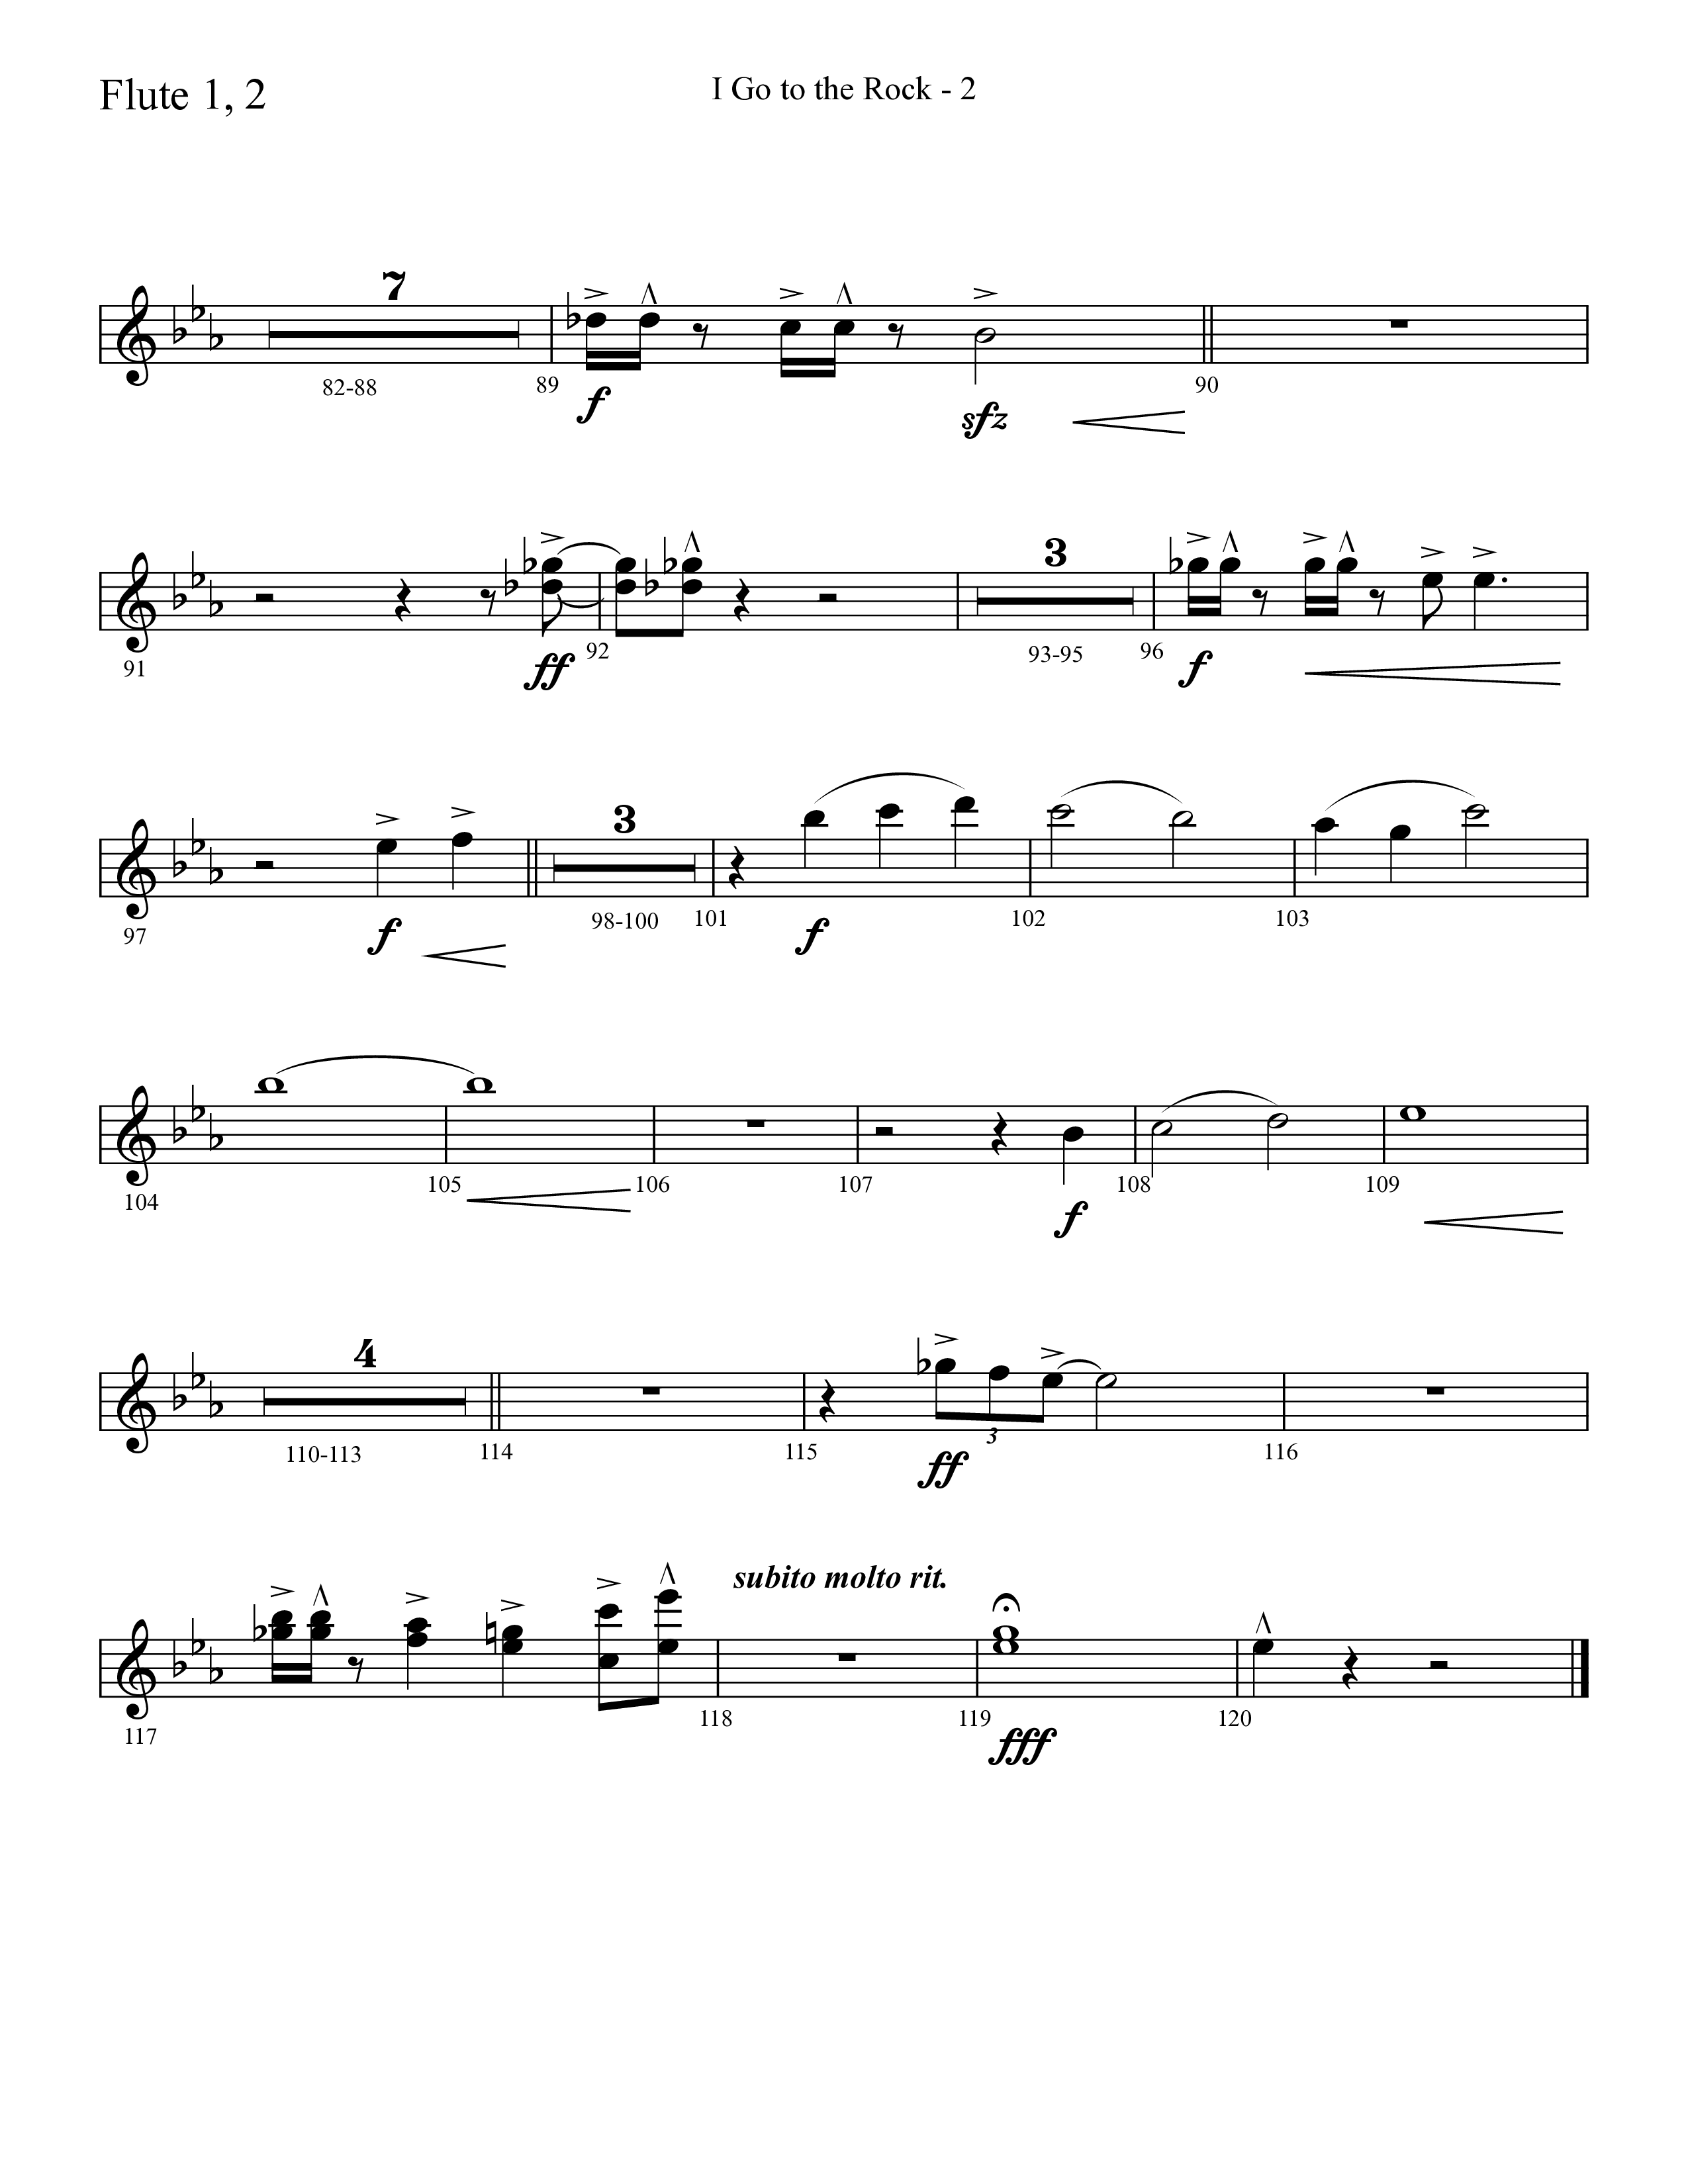 I Go To The Rock (Choral Anthem SATB) Flute 1/2 (Lifeway Choral / Arr. Cliff Duren)